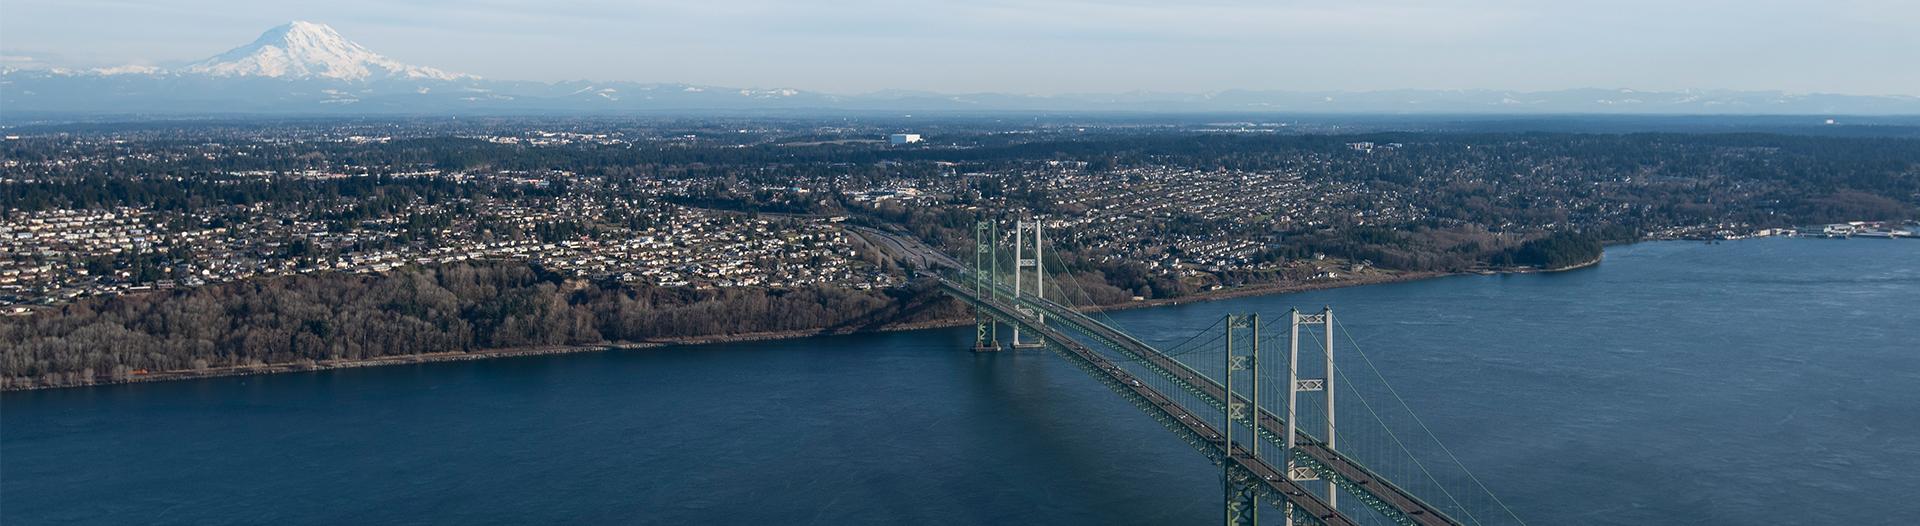 aerial photo of a bridge across water